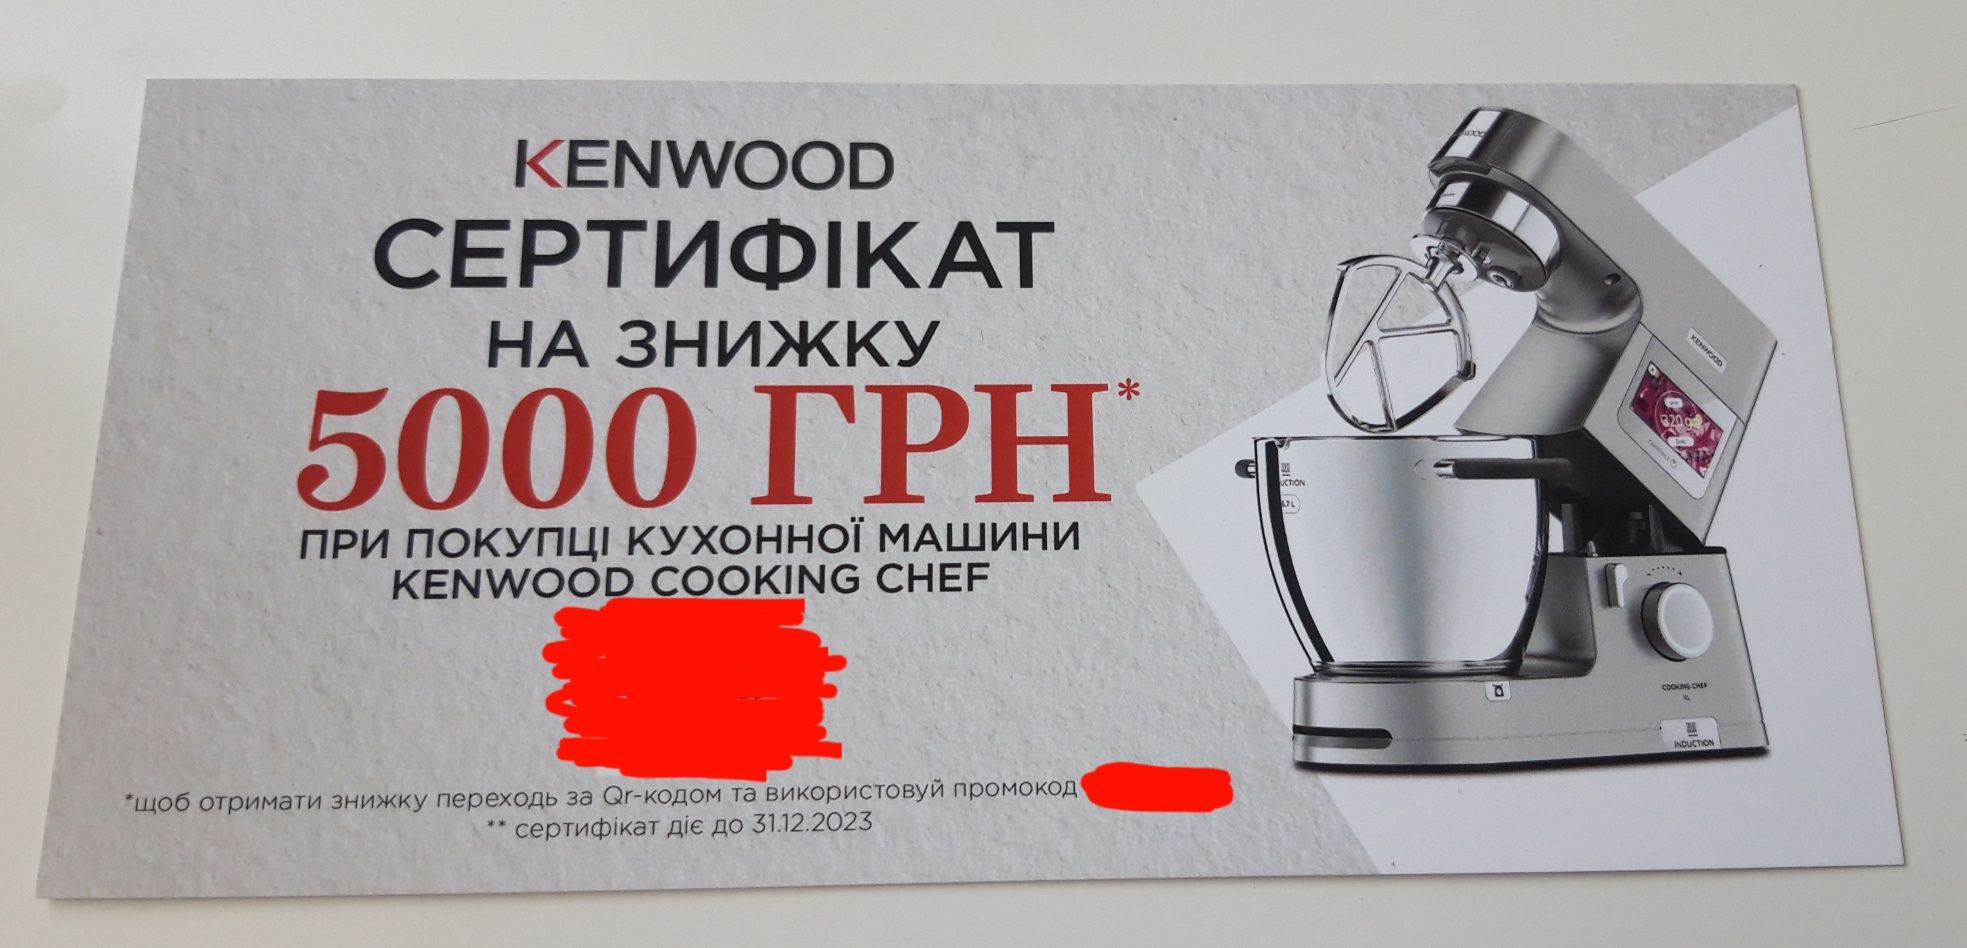 Ceртифікат KENWOOD 5000 грн